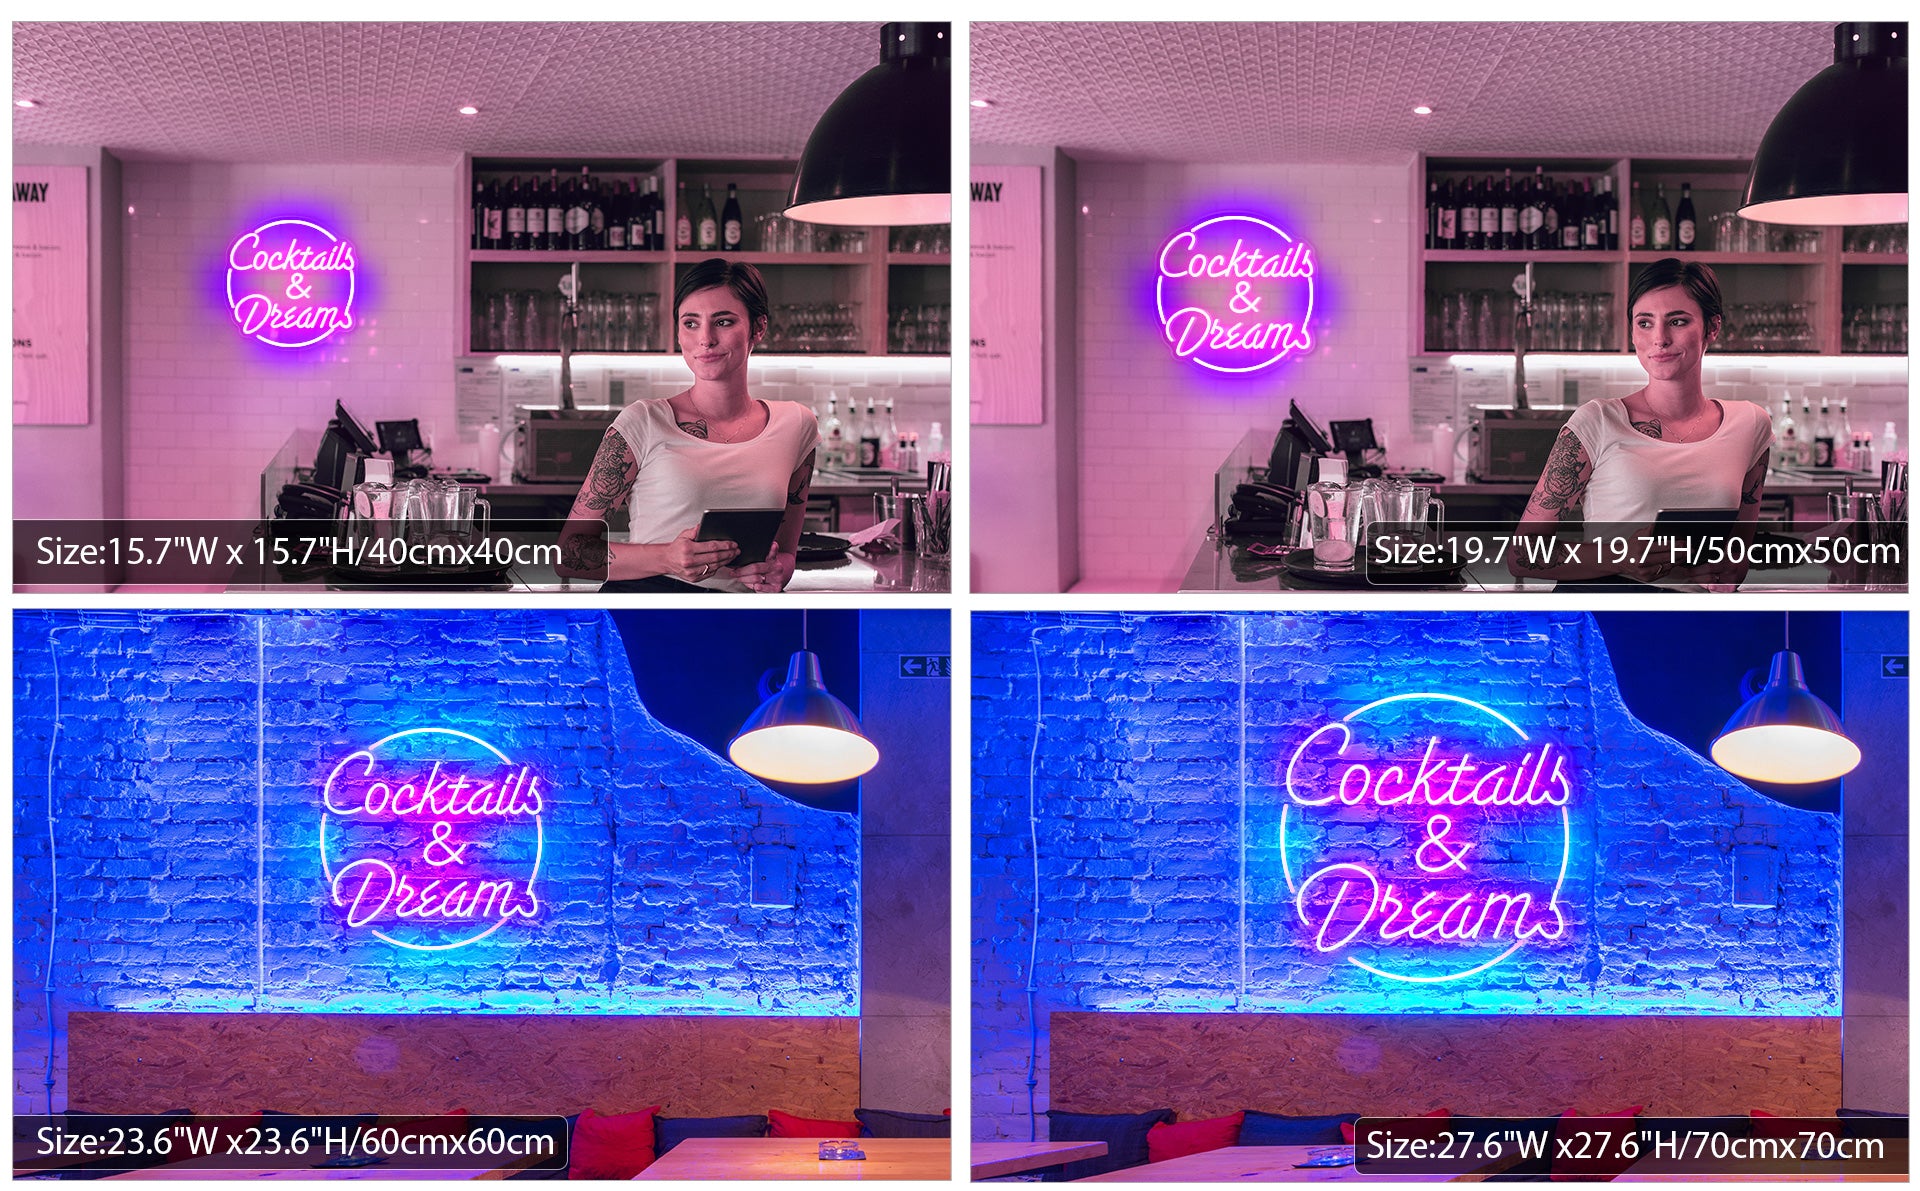 Cocktails & Dreams neon sign